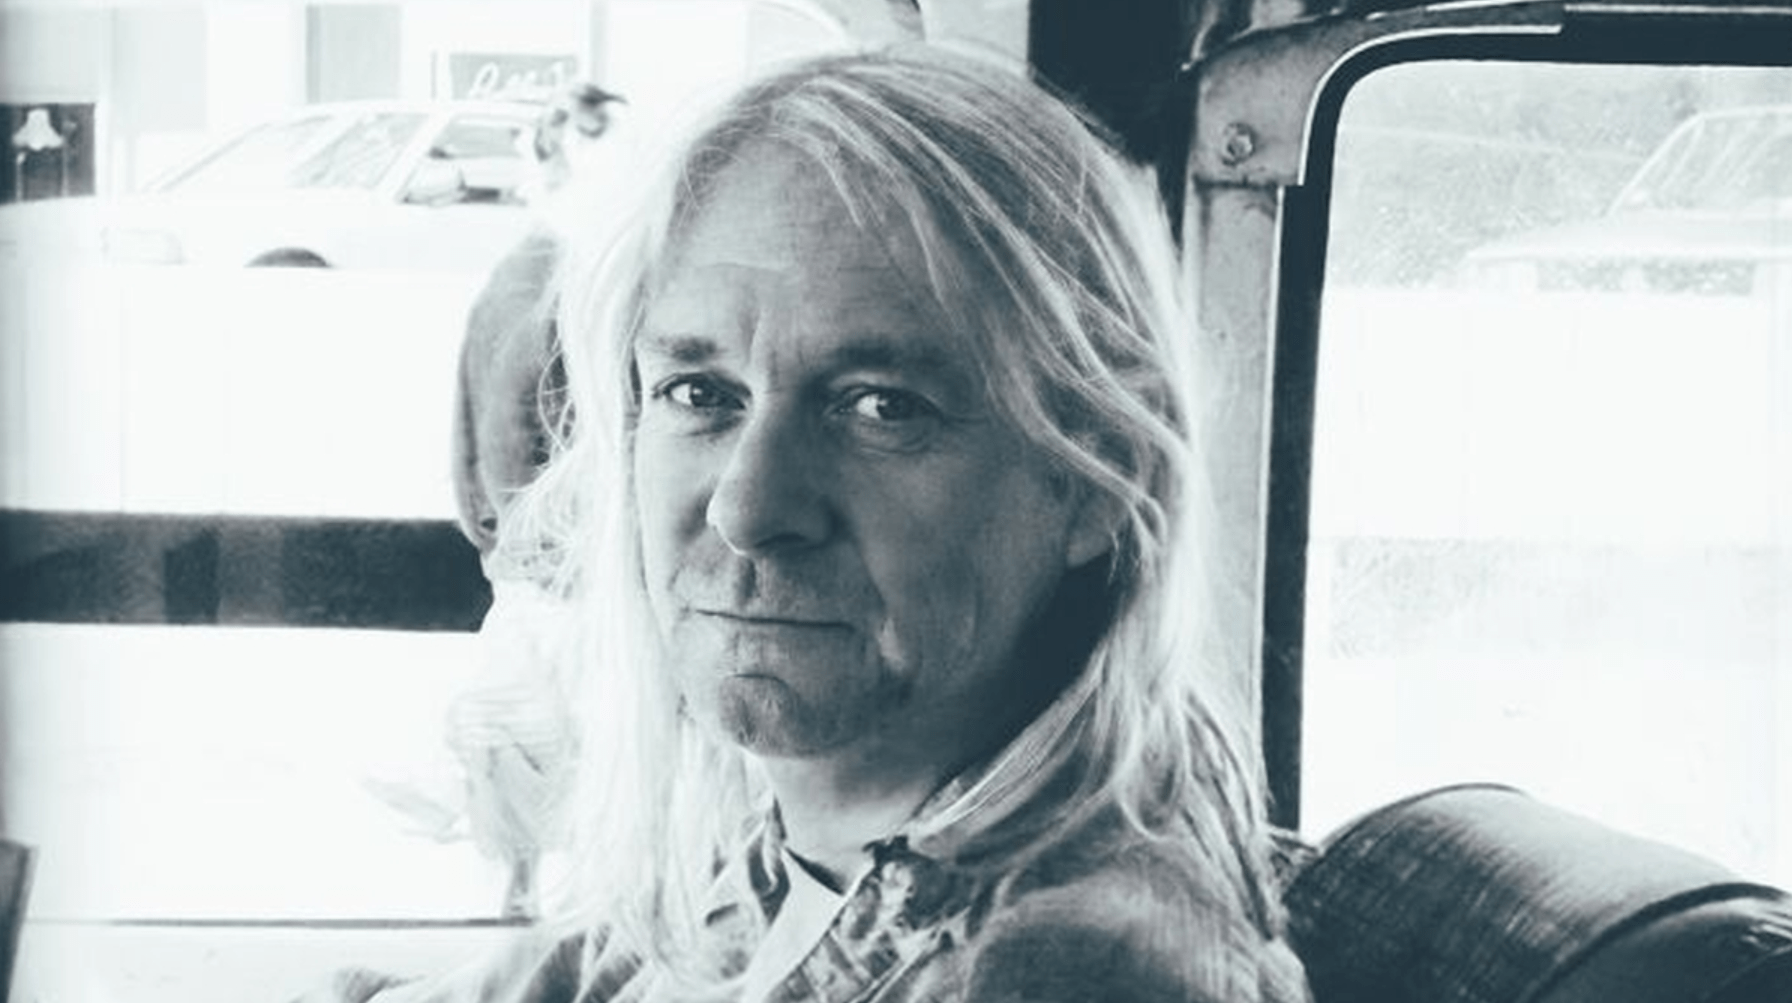 Kurt Cobain ages using AI